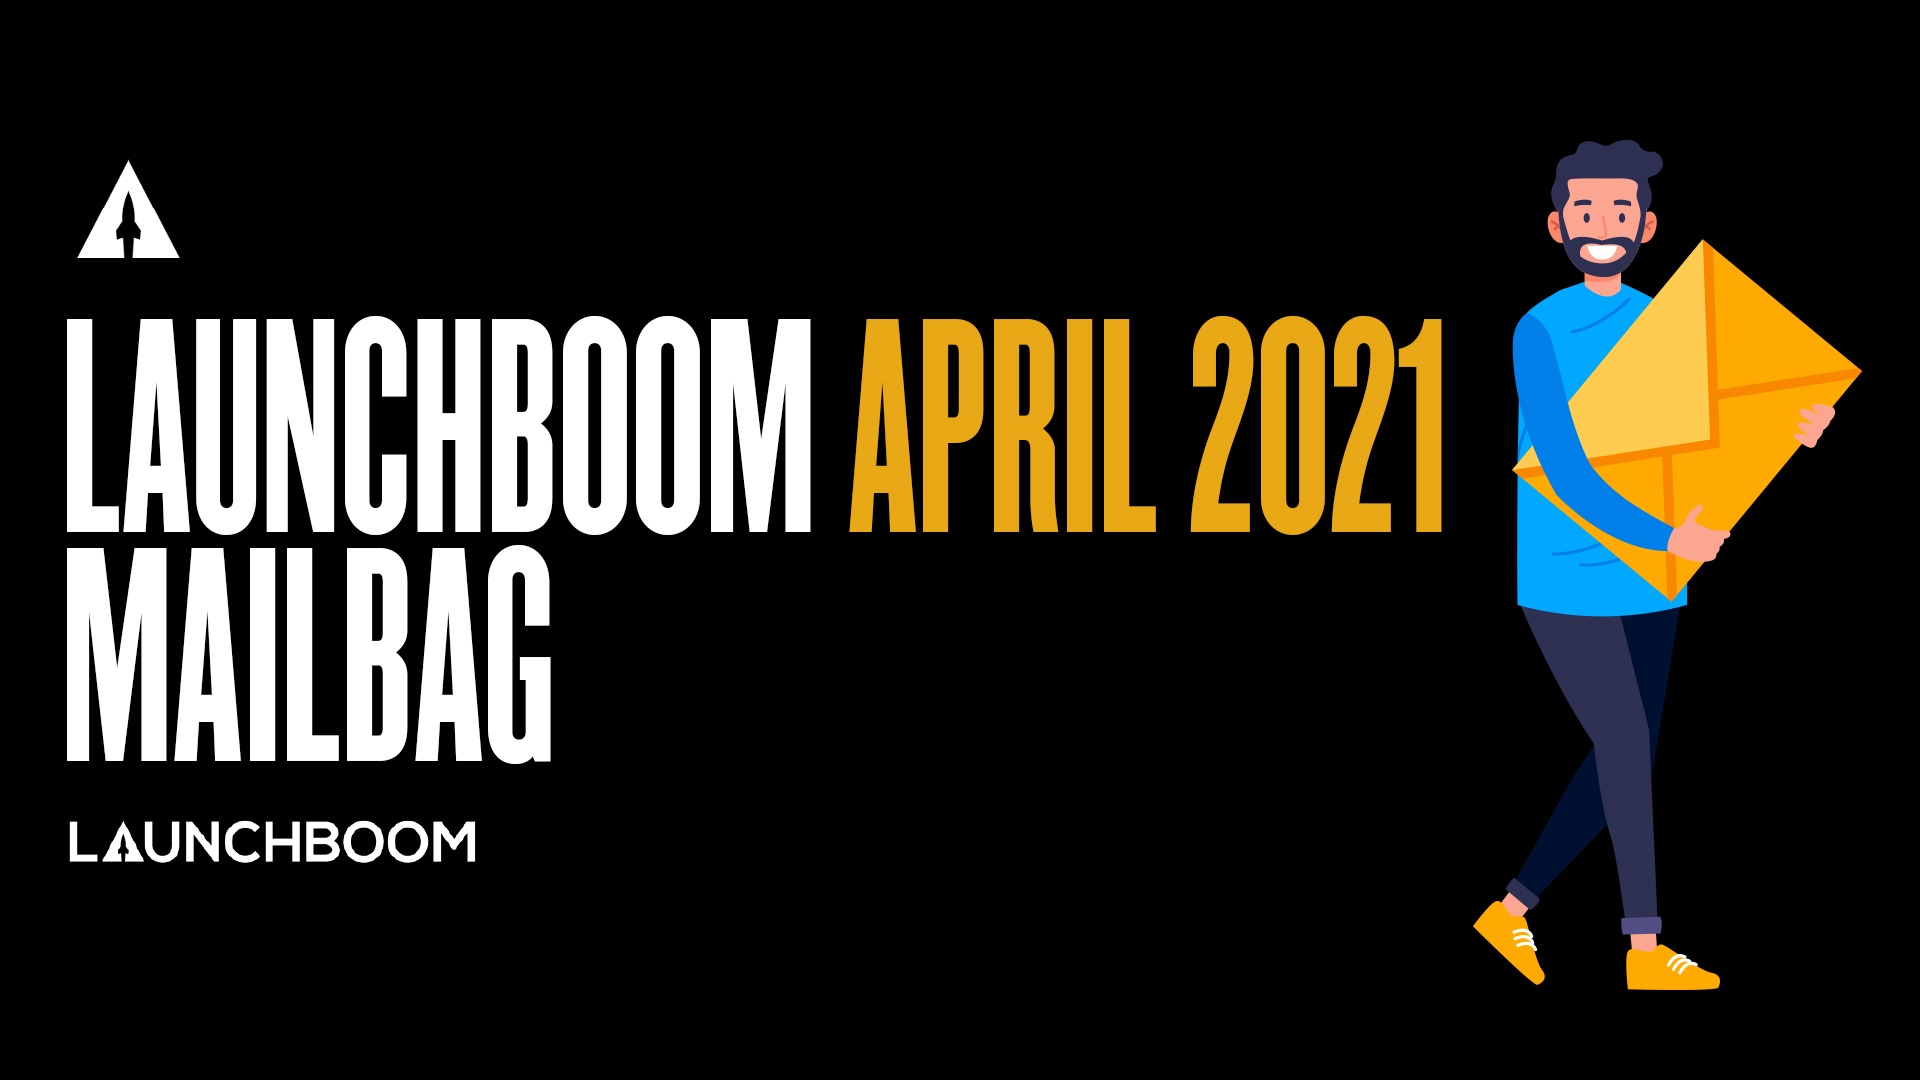 LaunchBoom April 2021 Mailbag